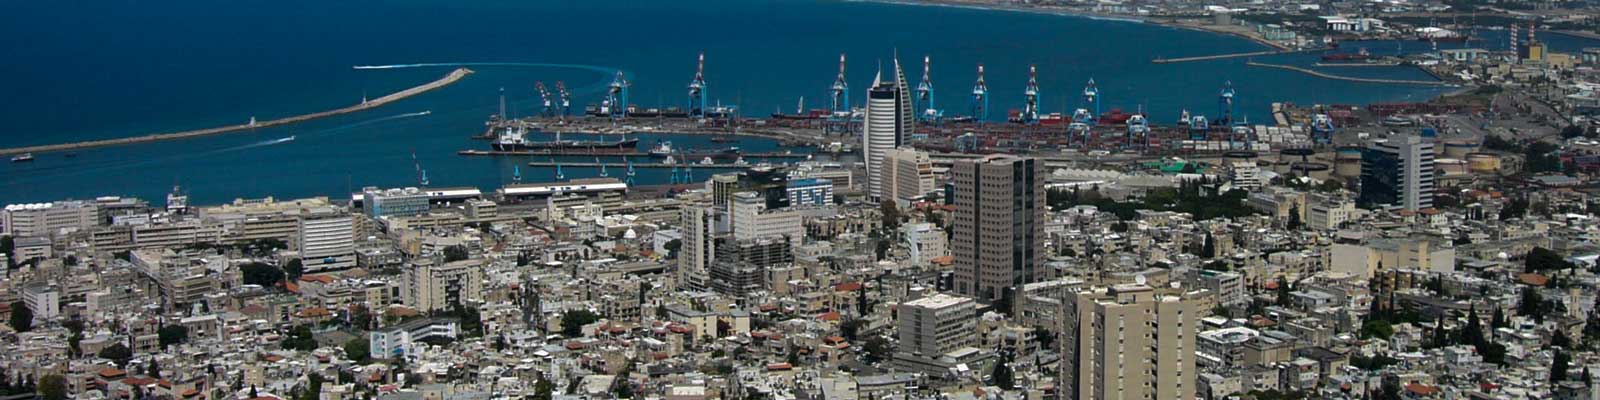 Haifa is Israel's third largest city.